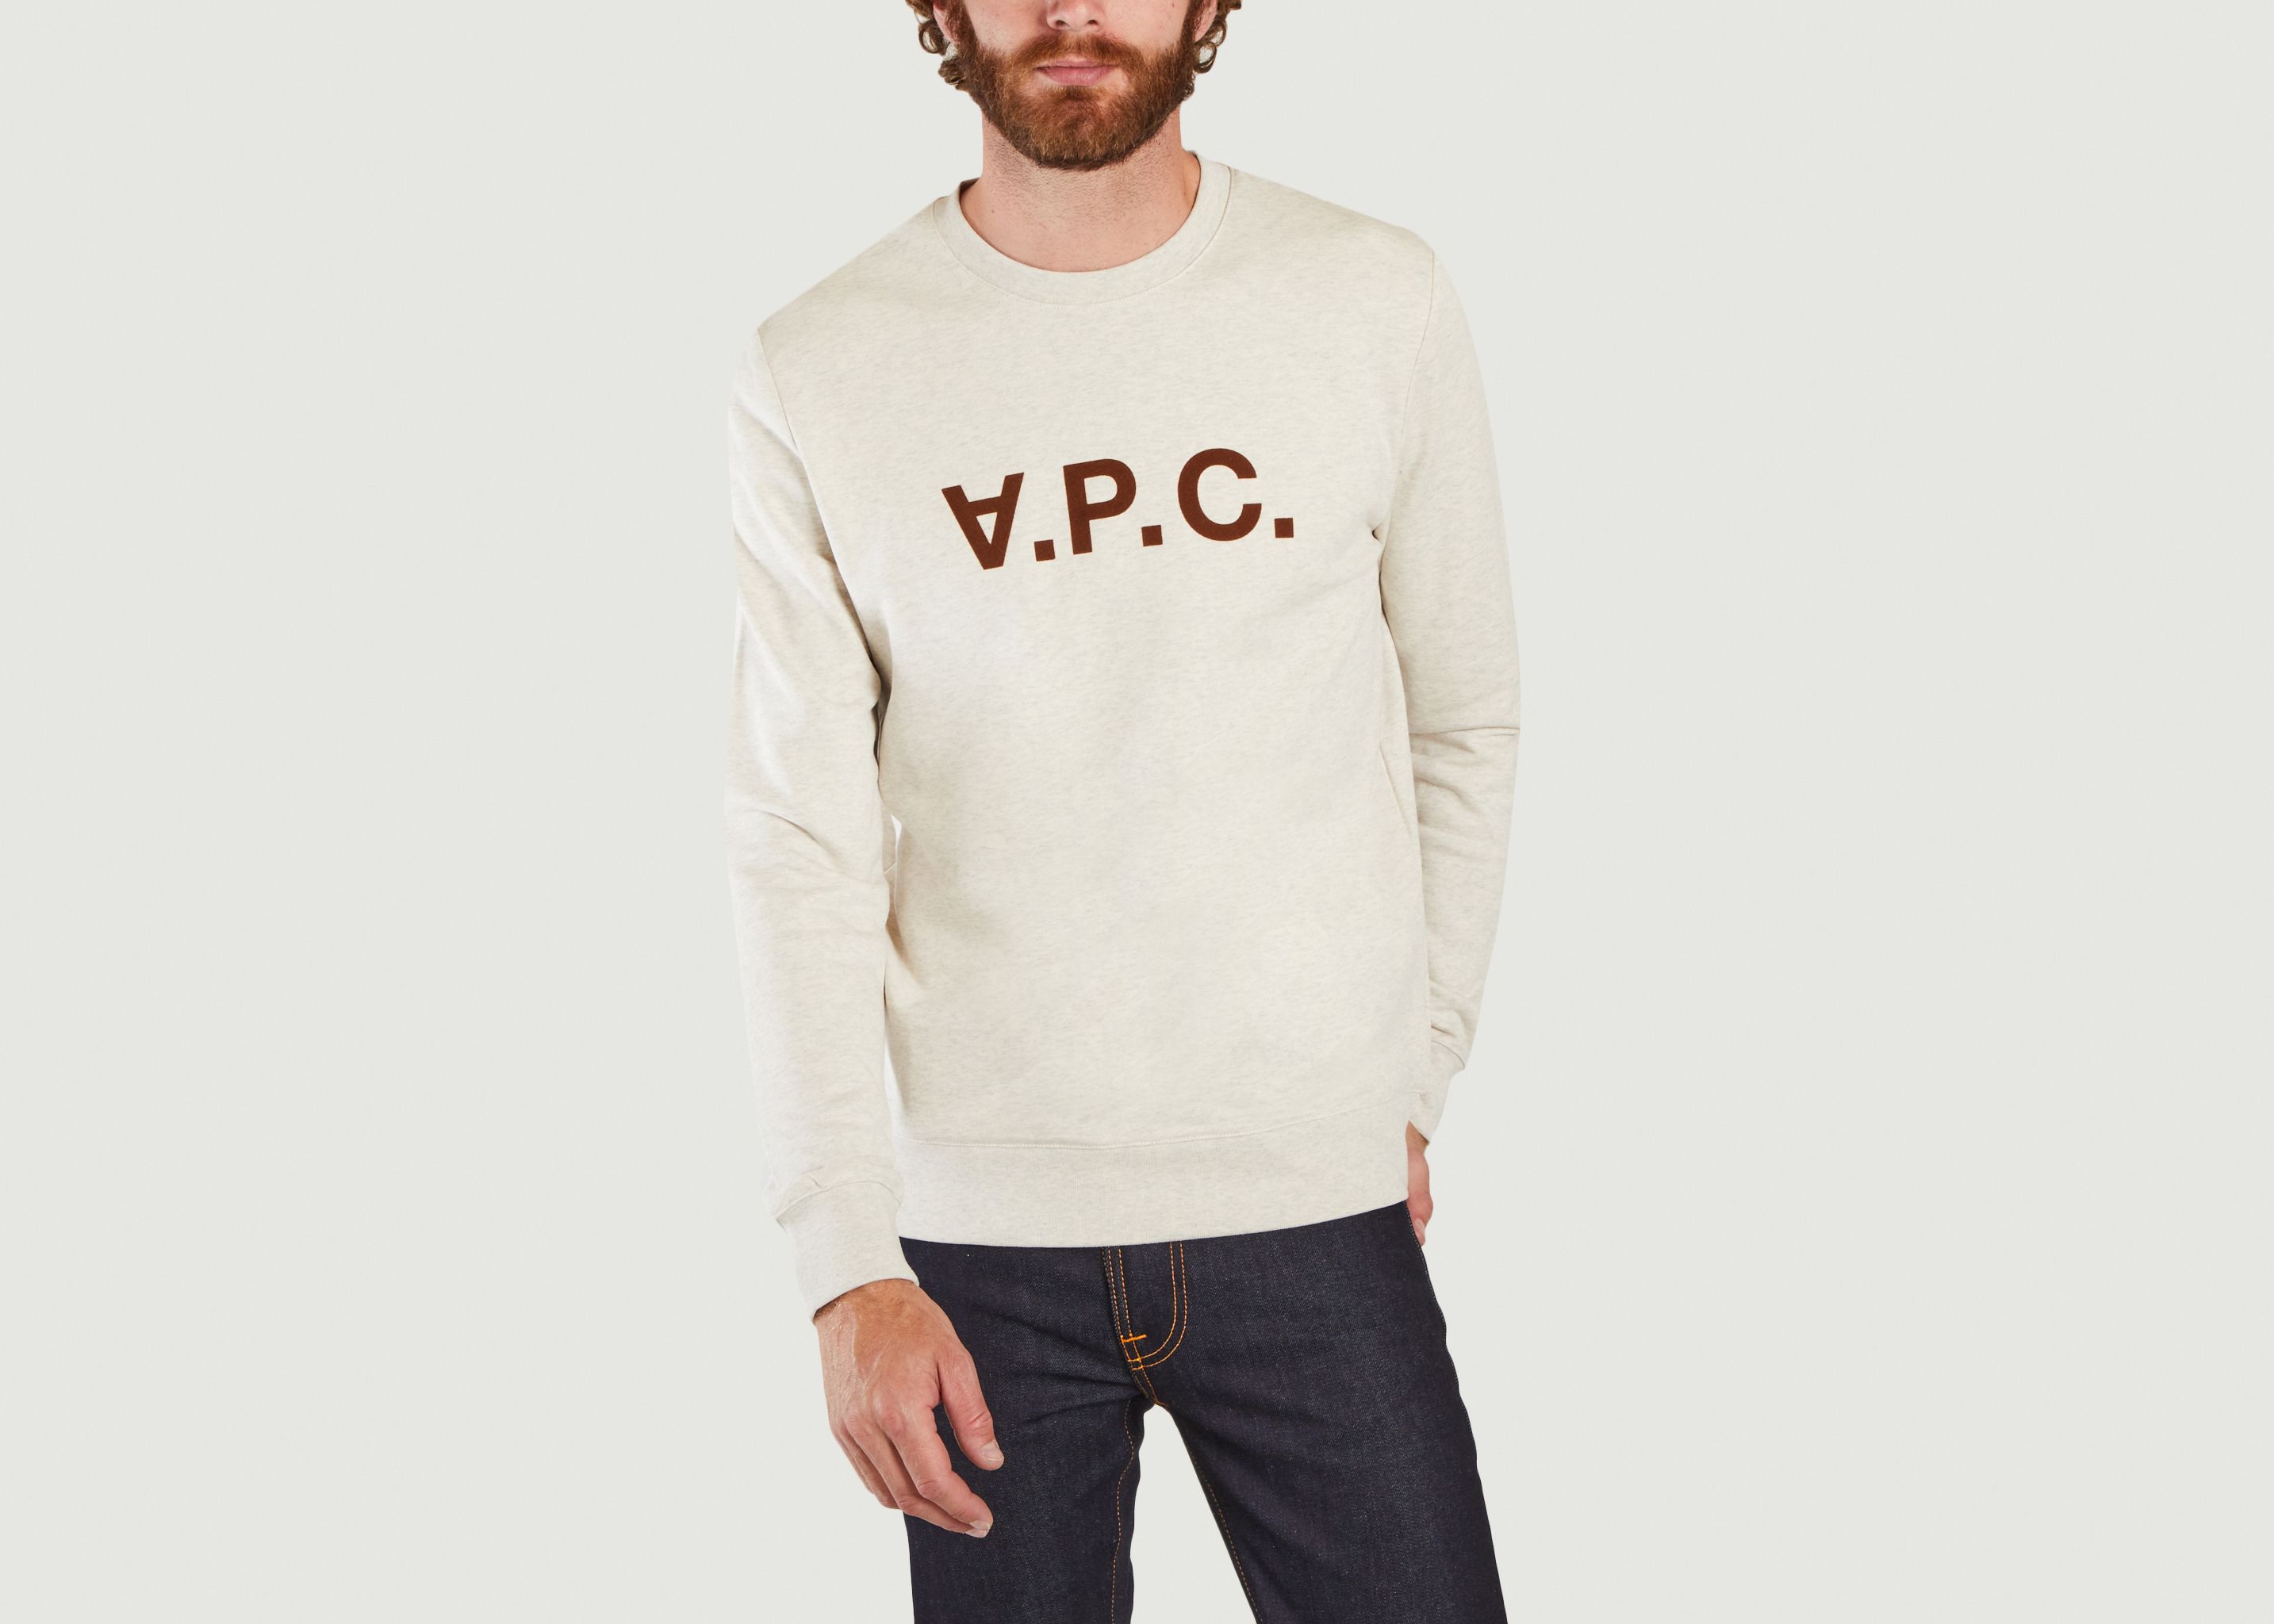 VPC Sweatshirt - A.P.C.